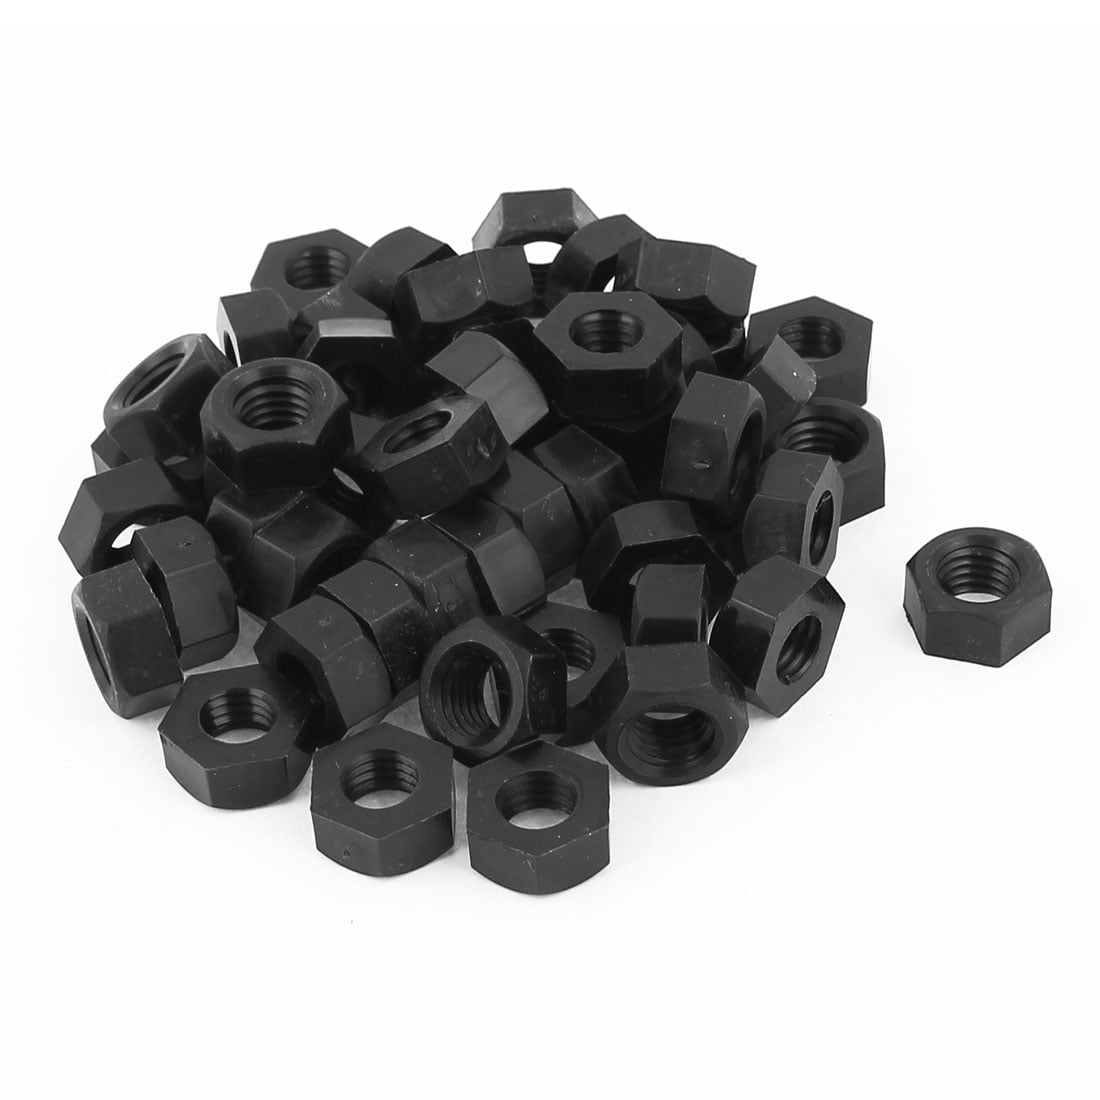 Metric M8 Thread Nylon Insert Lock Screw Fastener Hexagon Hex Nuts Black 50pcs 